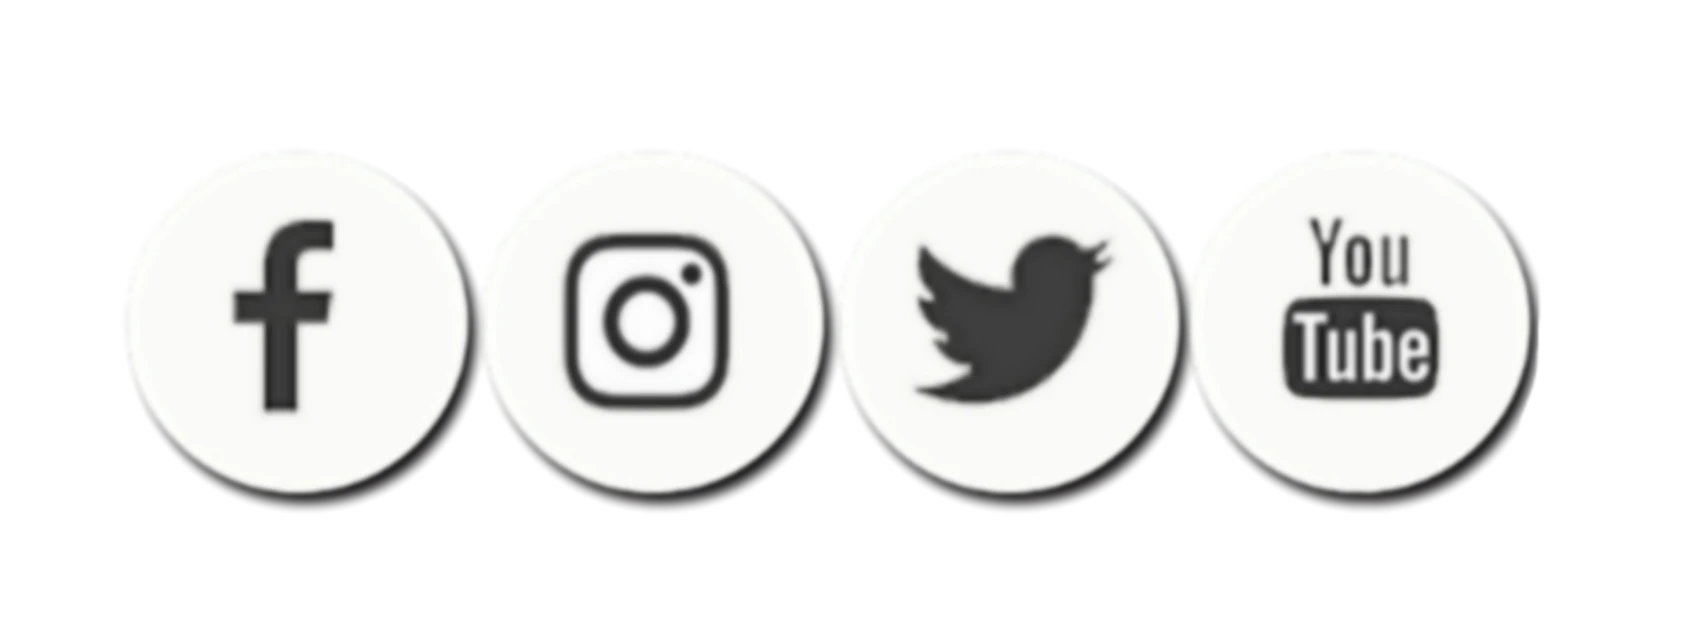 Facebook Instagram YoTube logo PNG Imagen de alta calidad